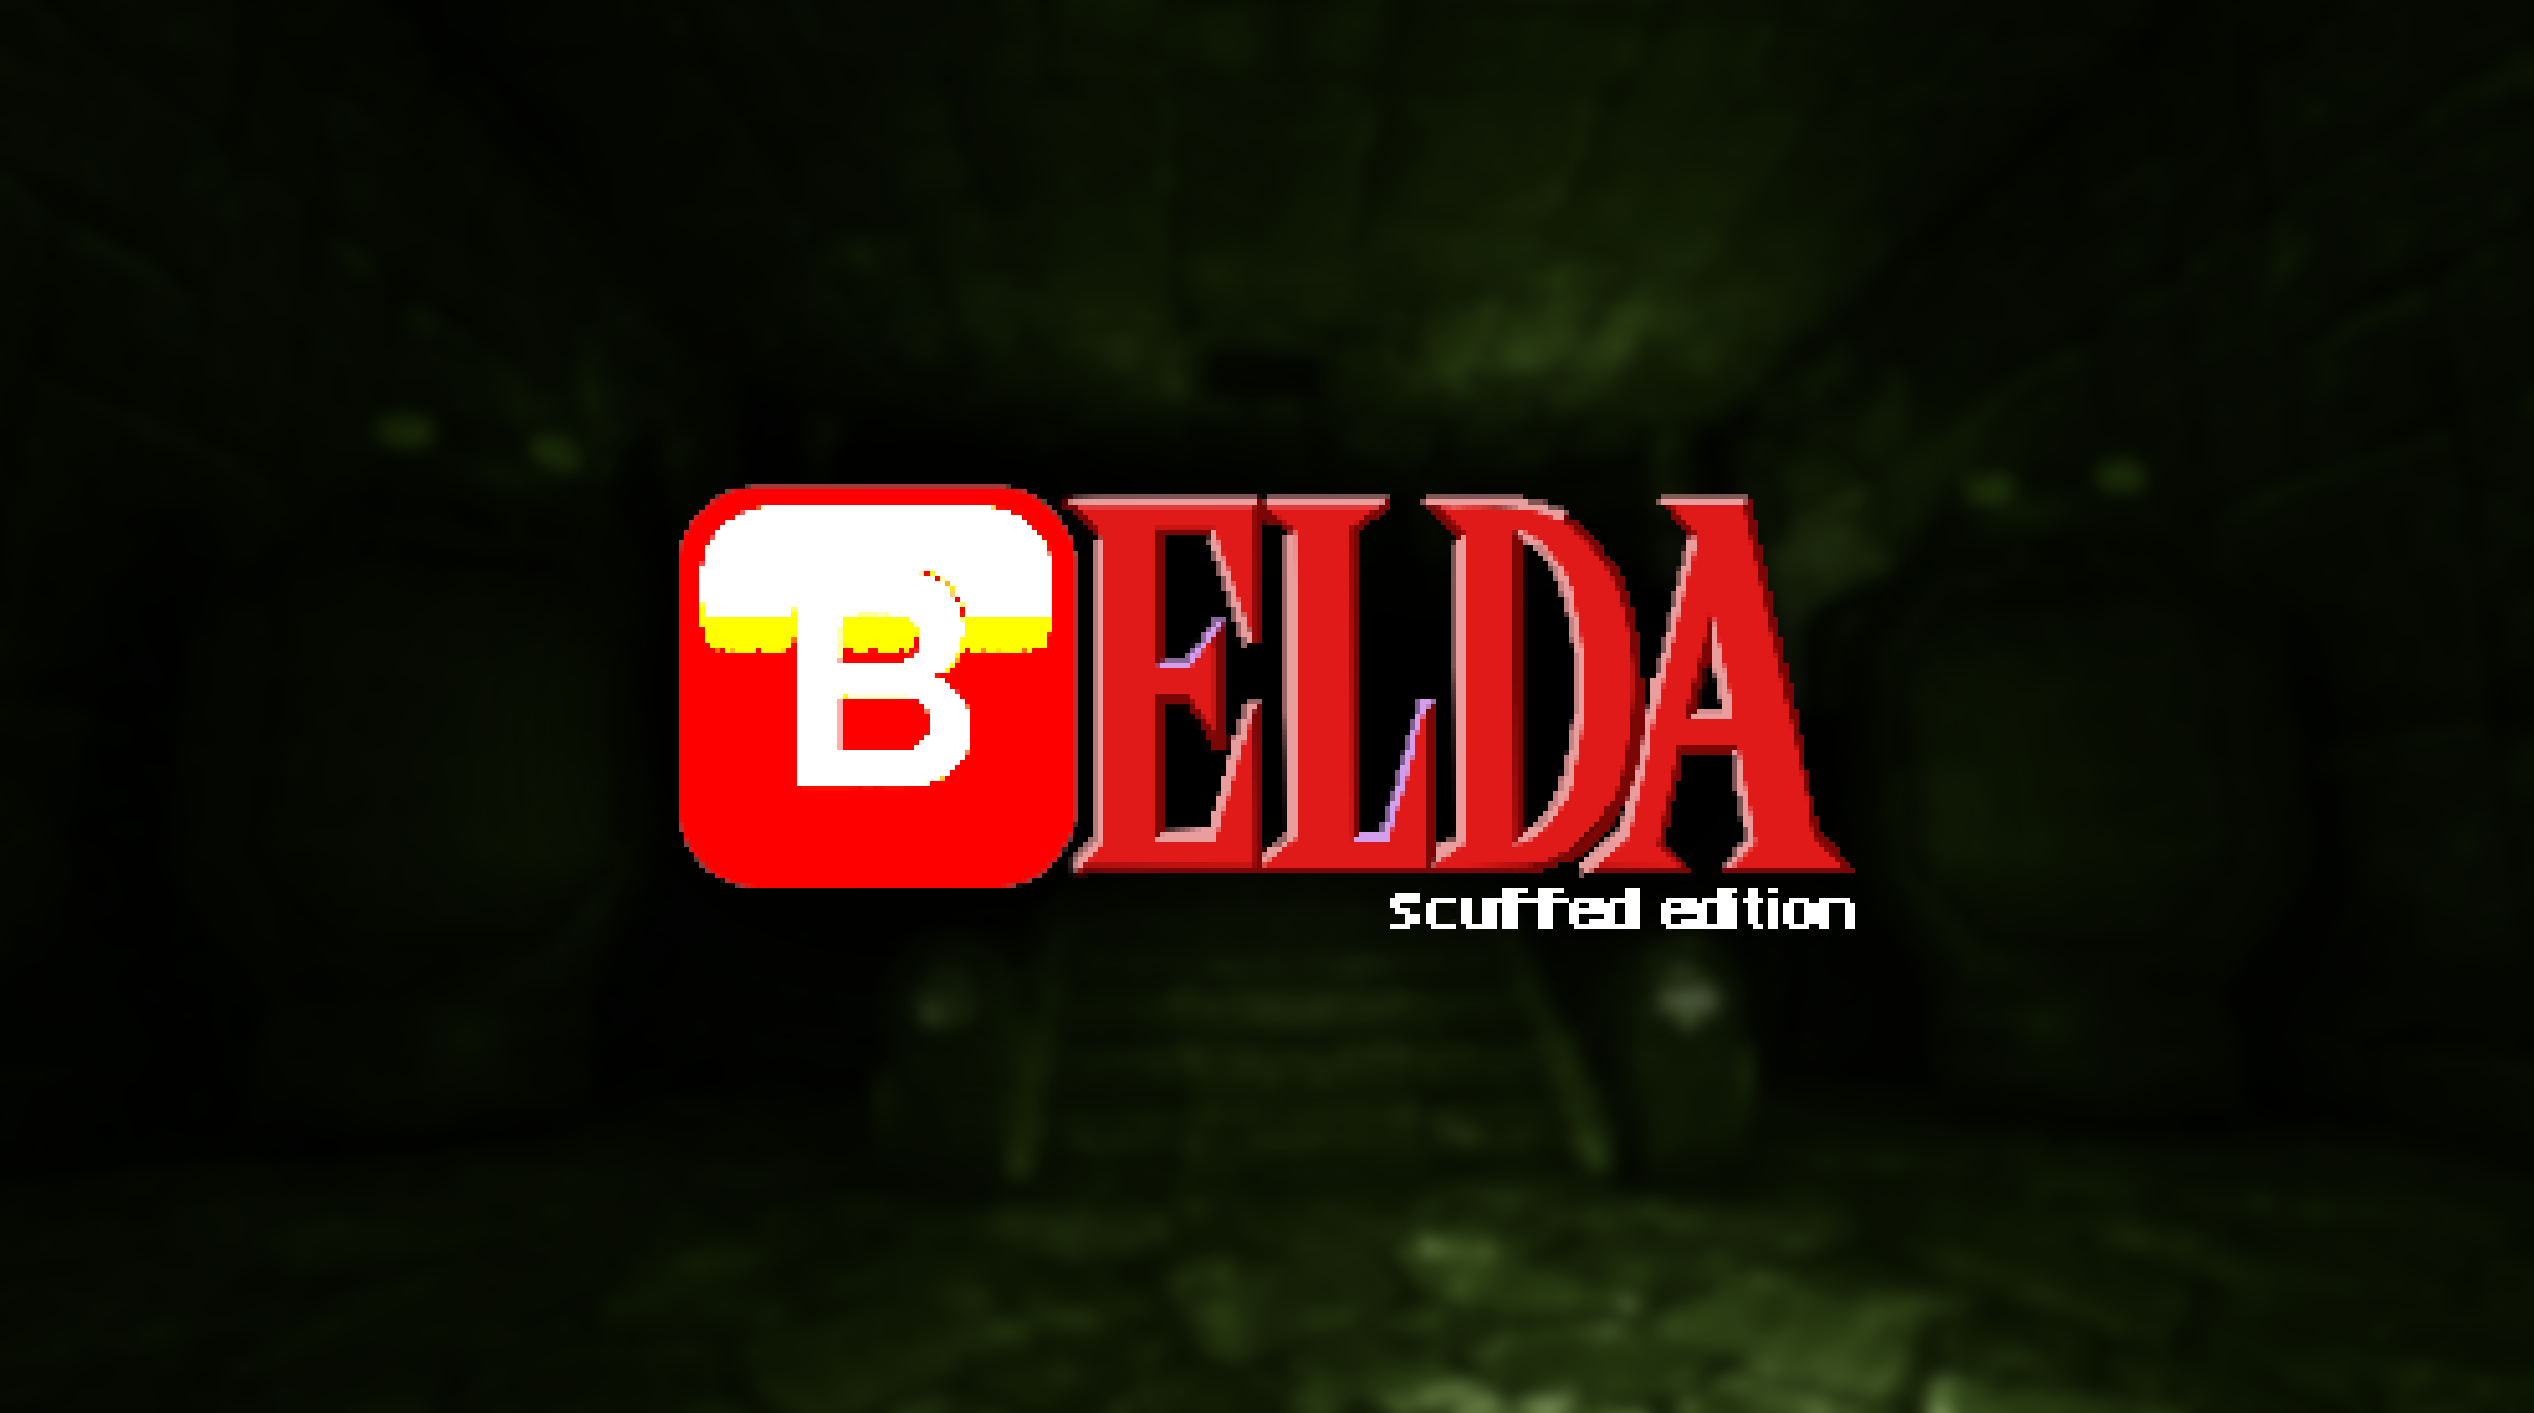 Belda - Scuffed Edition